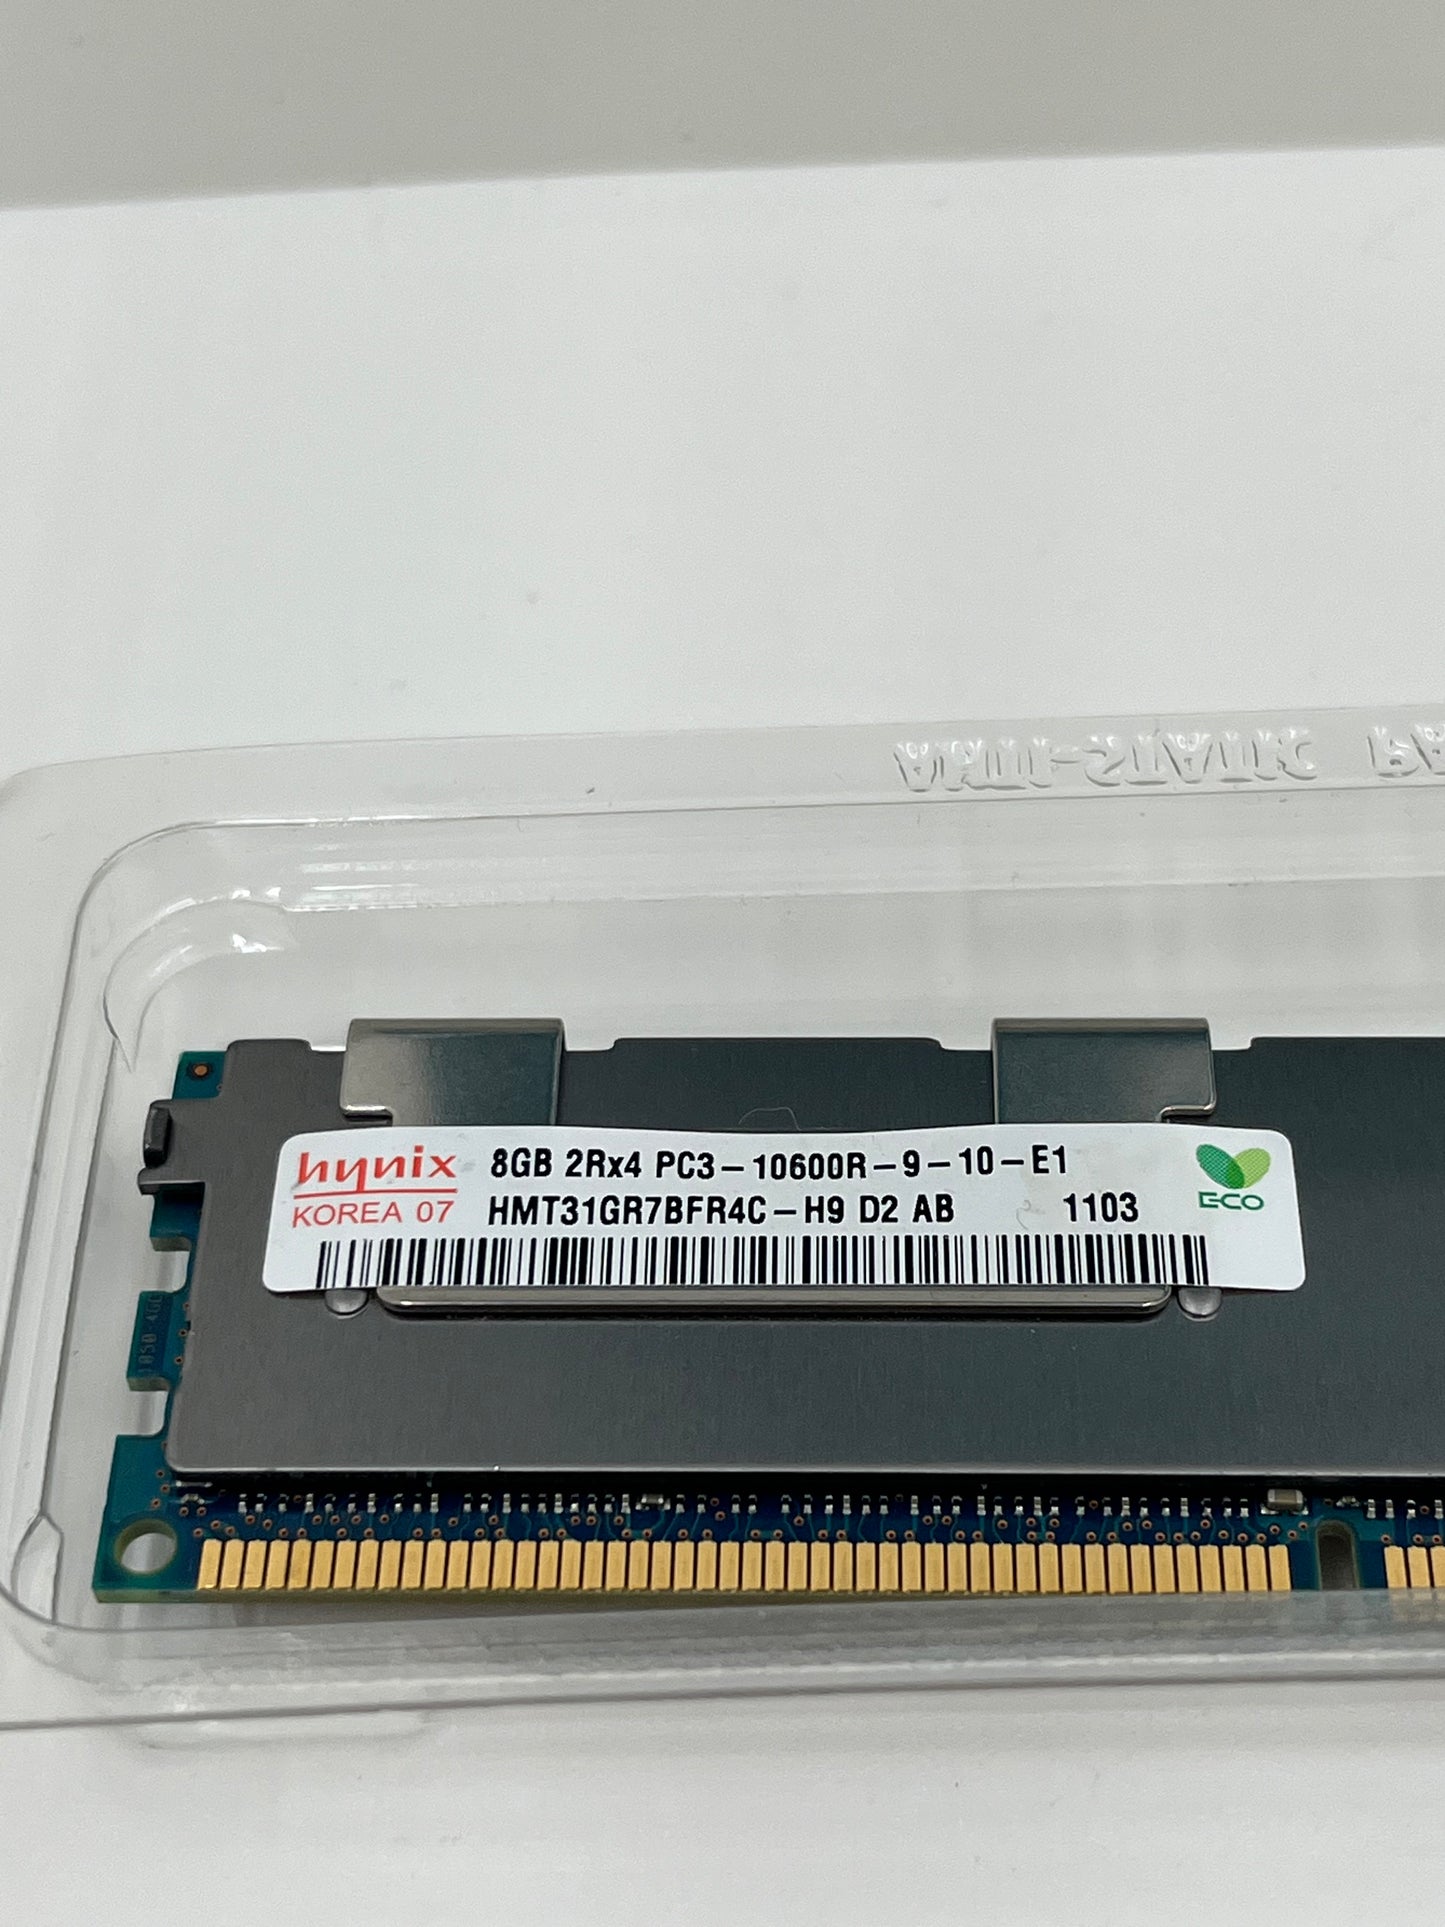 8GB Hynix Korea 07 1333MHz DDR3 RAM